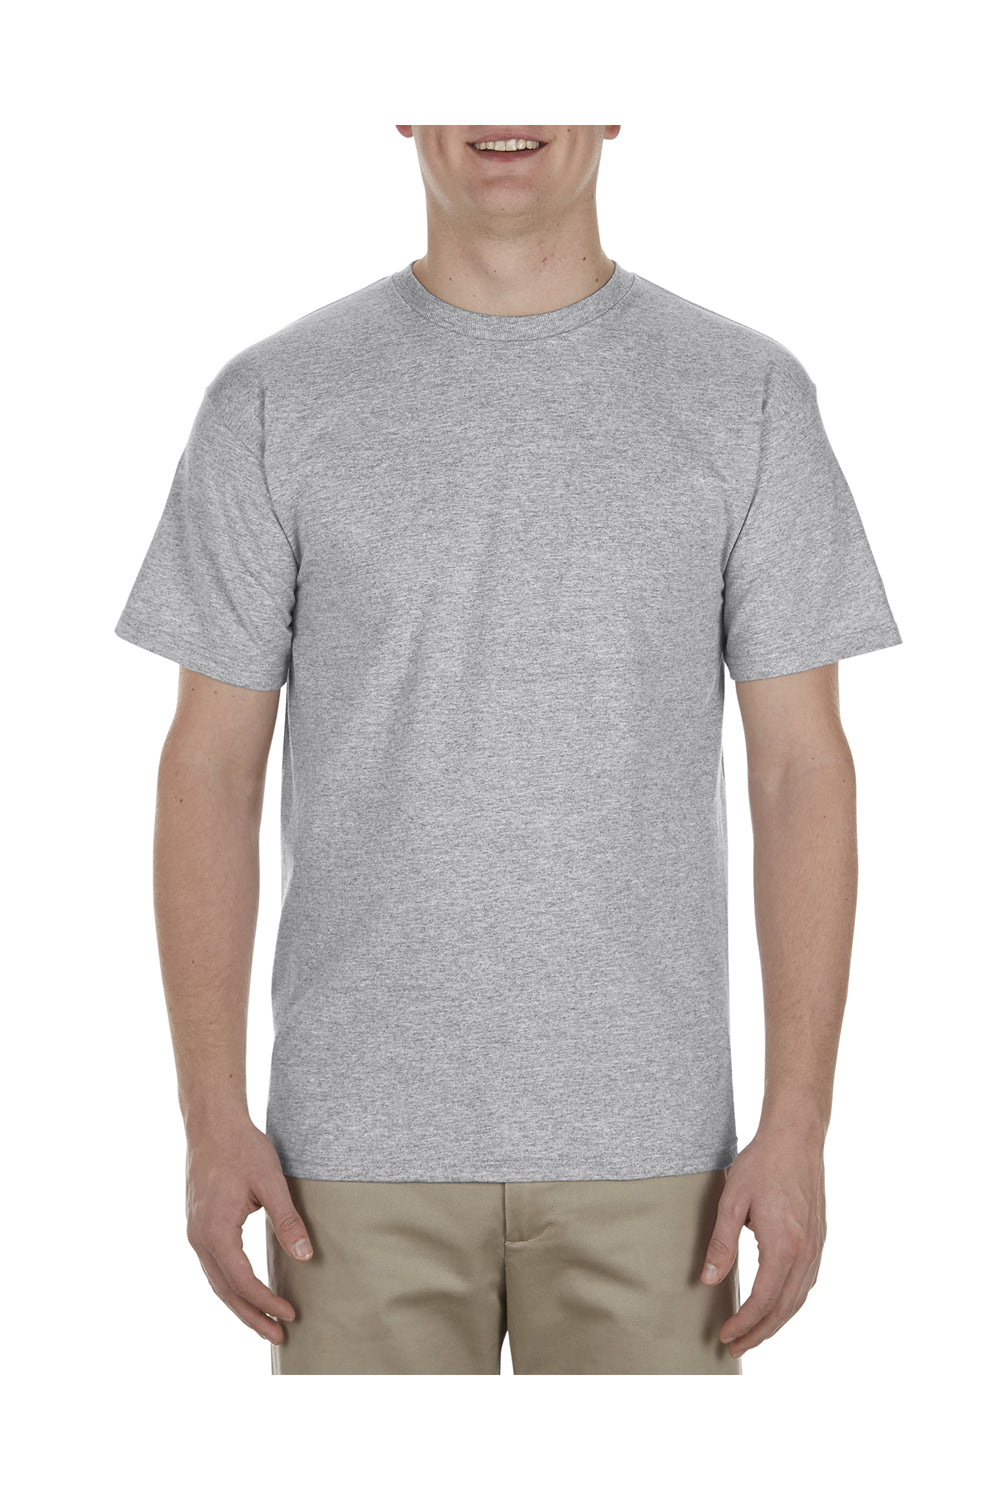 Alstyle AL1701 Mens Soft Spun Short Sleeve Crewneck T-Shirt Heather Grey Front